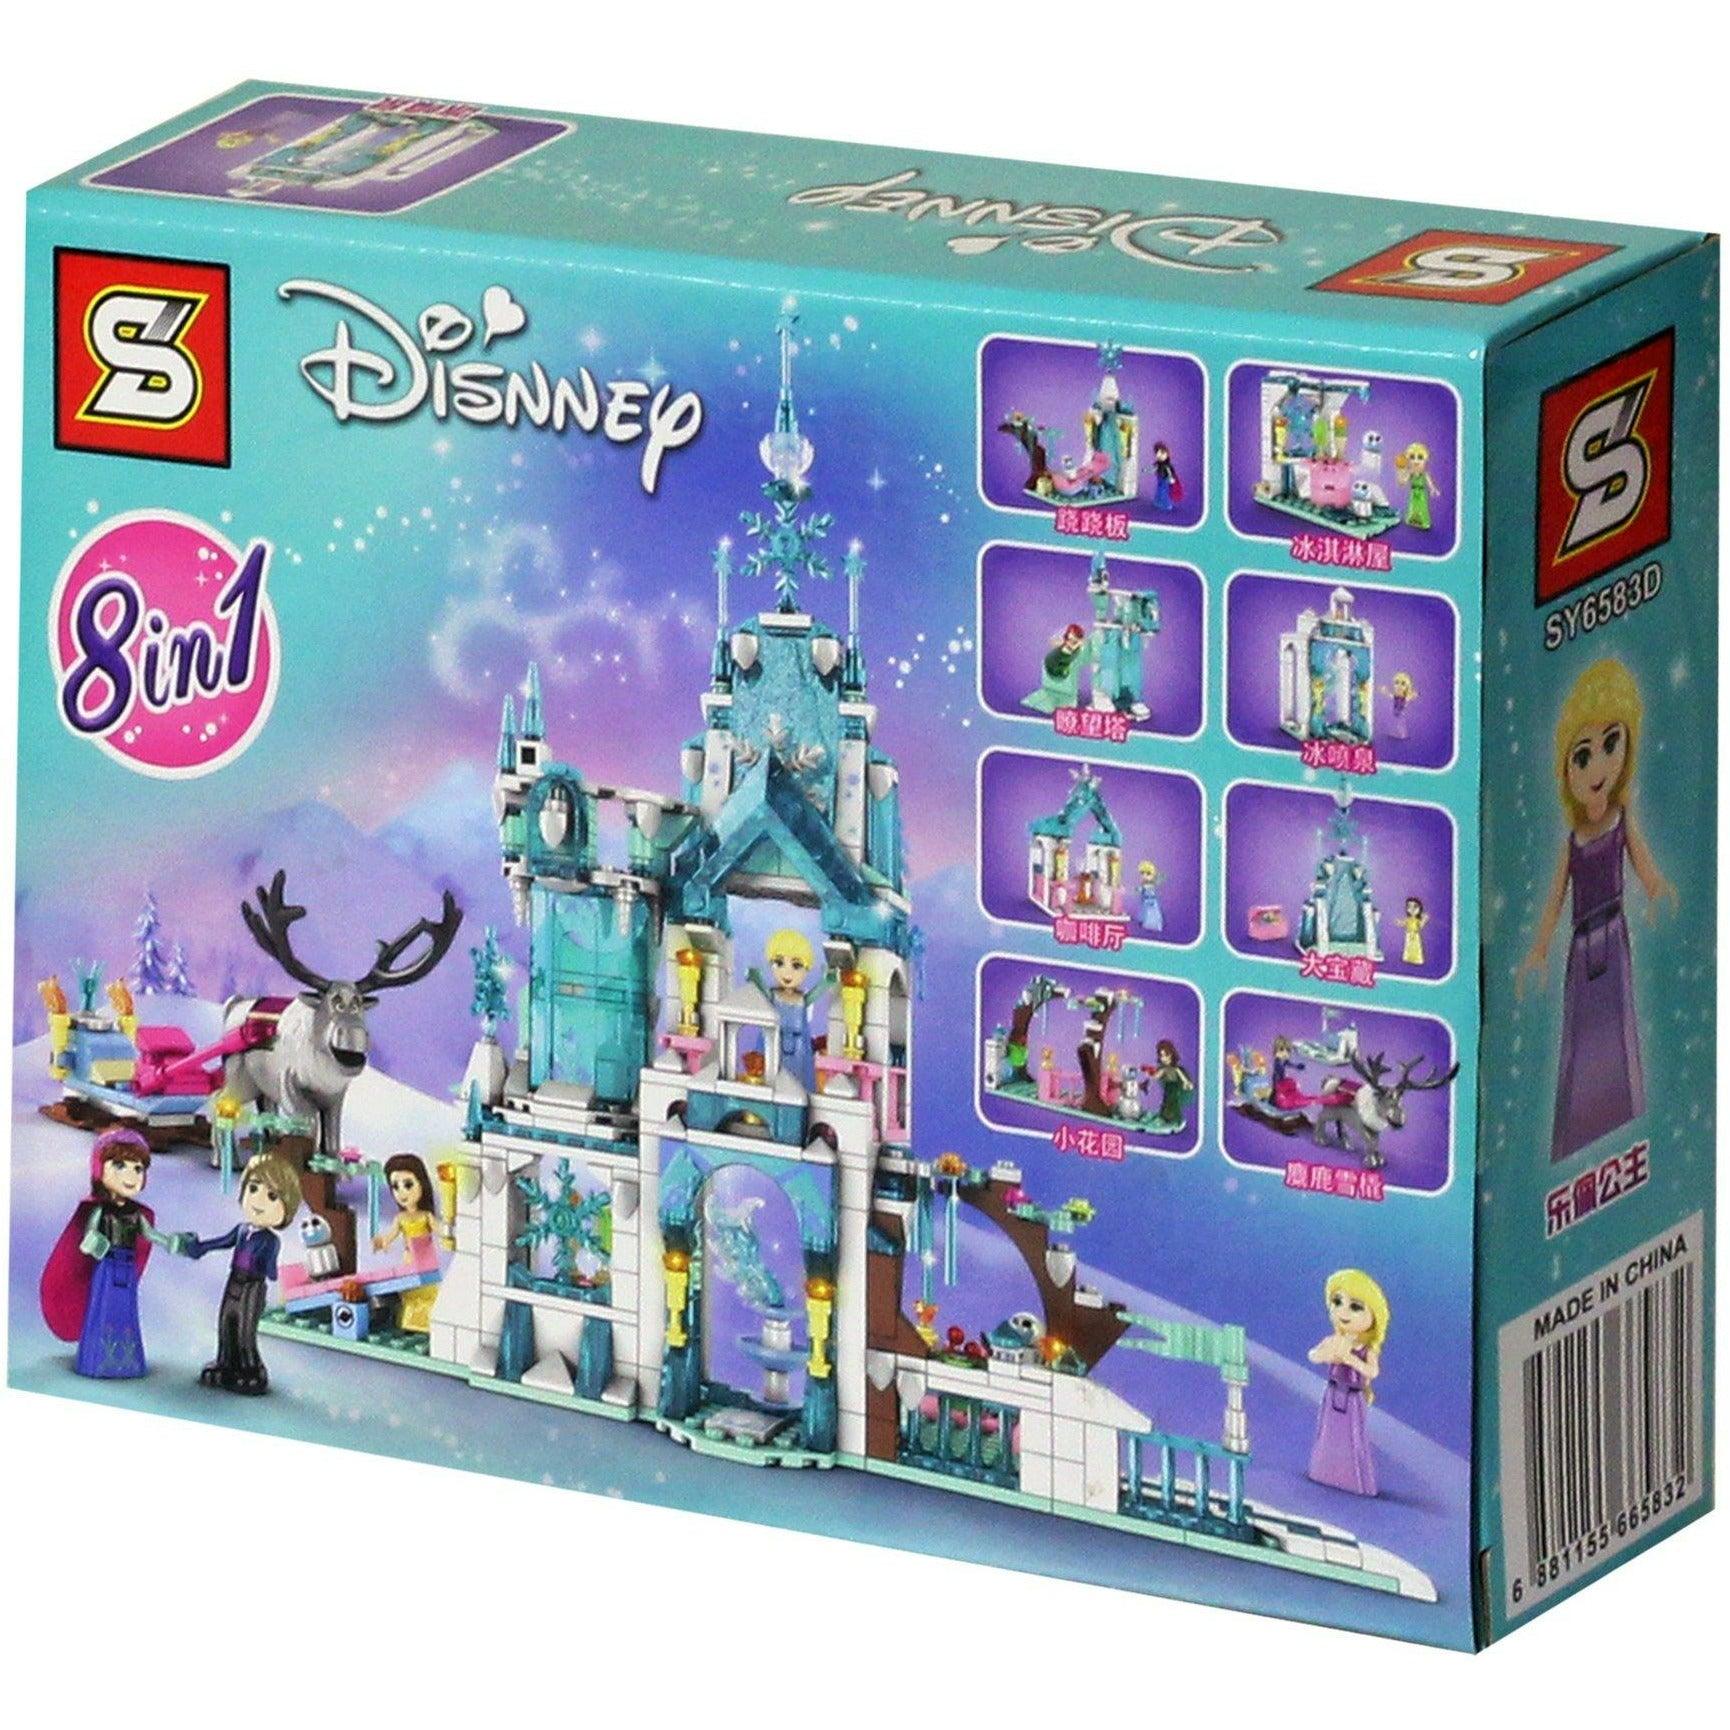 Frozen Princess Castle Building Blocks 75 Pieces 8 in 1 - BumbleToys - 5-7 Years, Frozen, Girls, LEGO, Toy Land